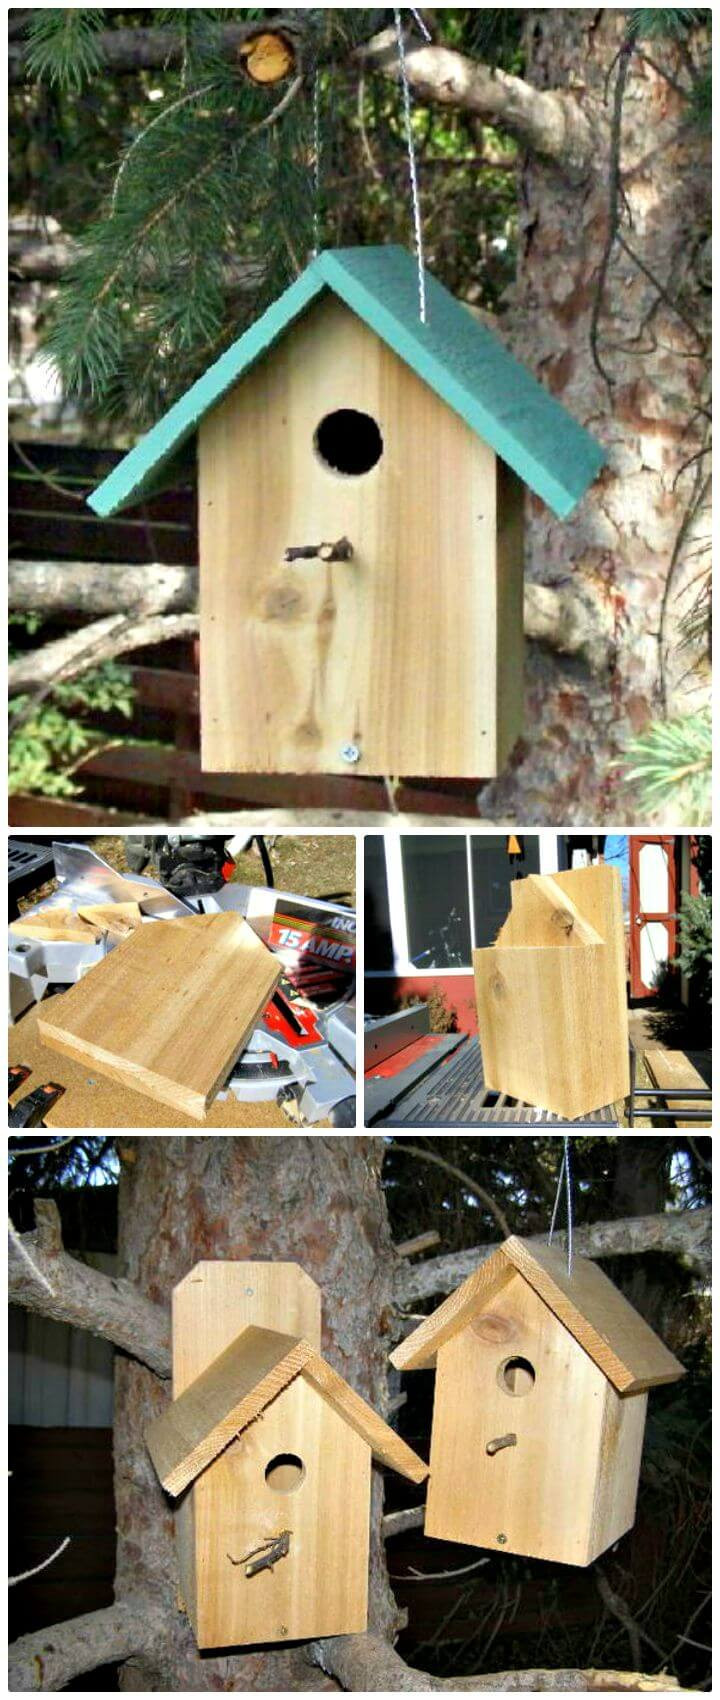 Best ideas about DIY Bird House
. Save or Pin Easy And Cool DIY Birdhouse Ideas DIYCraftsGuru Now.